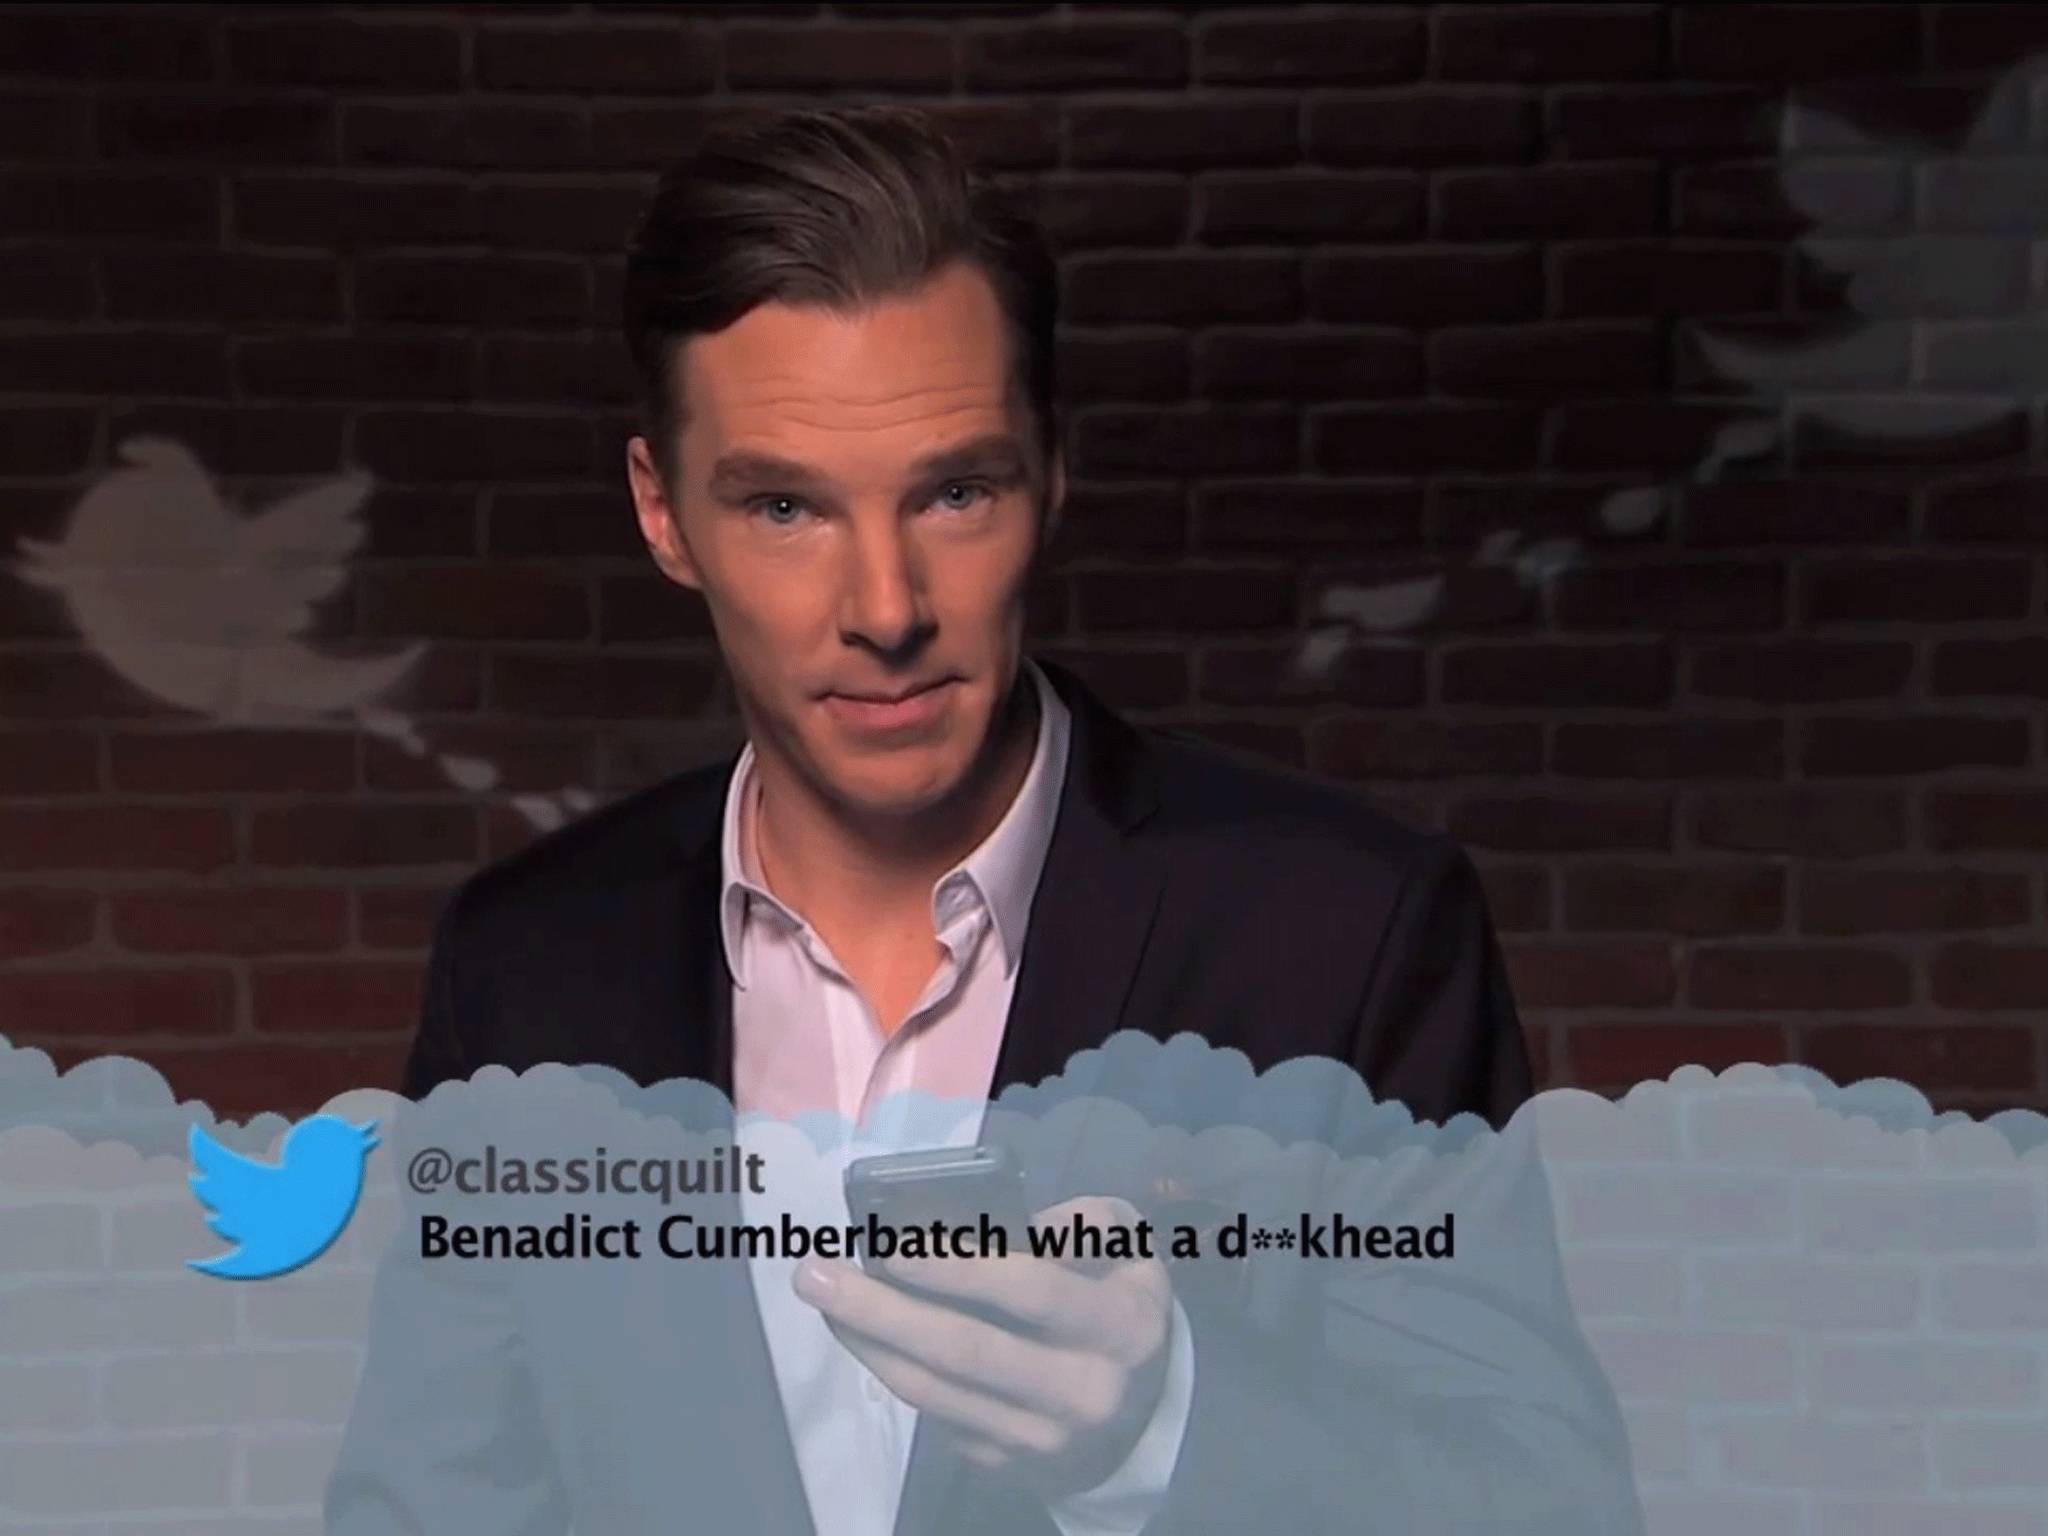 Benedict Cumberbatch was in agreement with his Twitter detractor